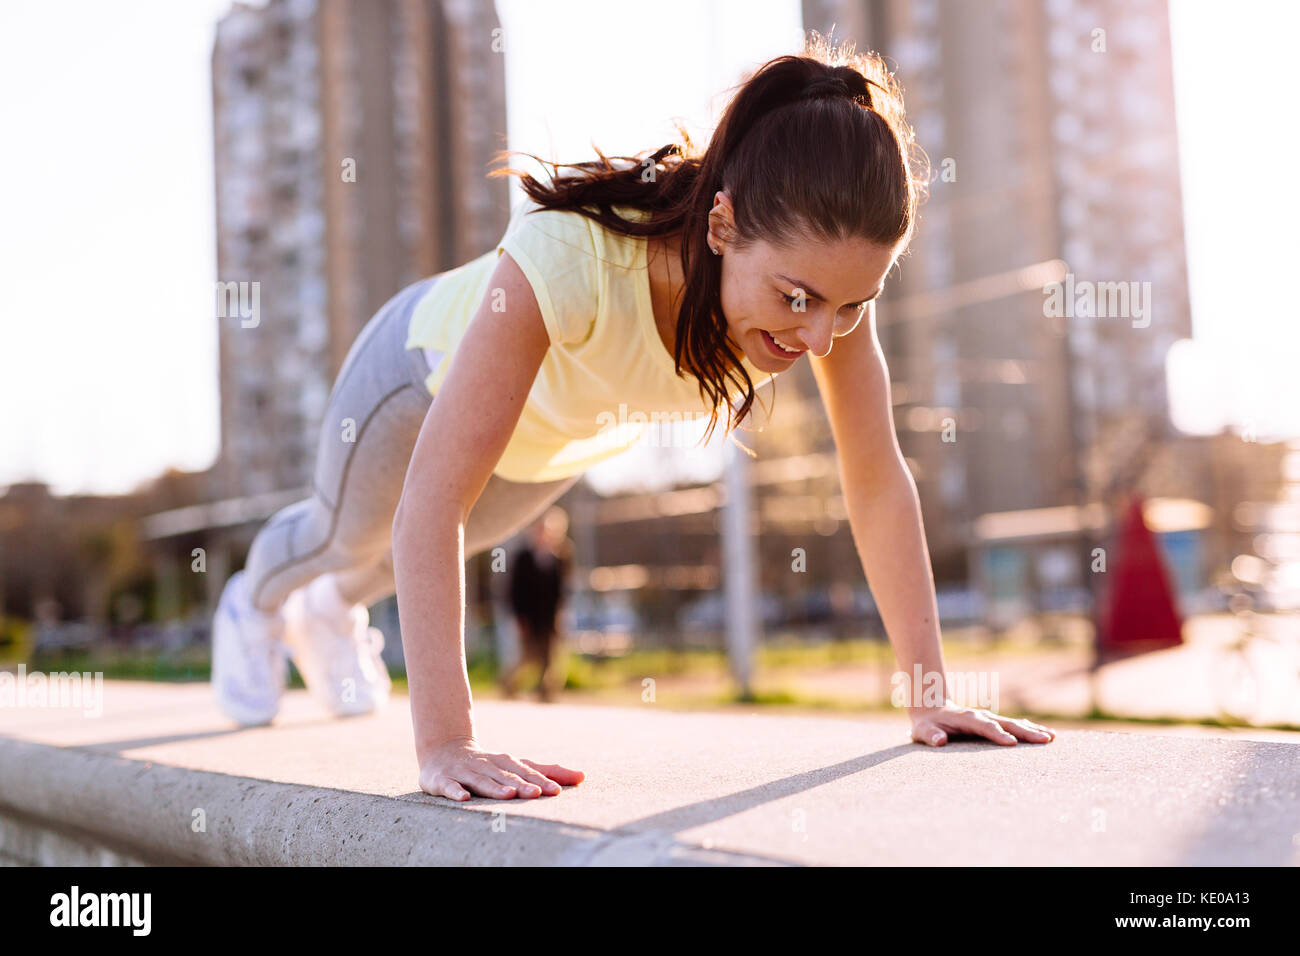 Press ups. Female exercising in underwear Stock Photo by ©petertt 129559114